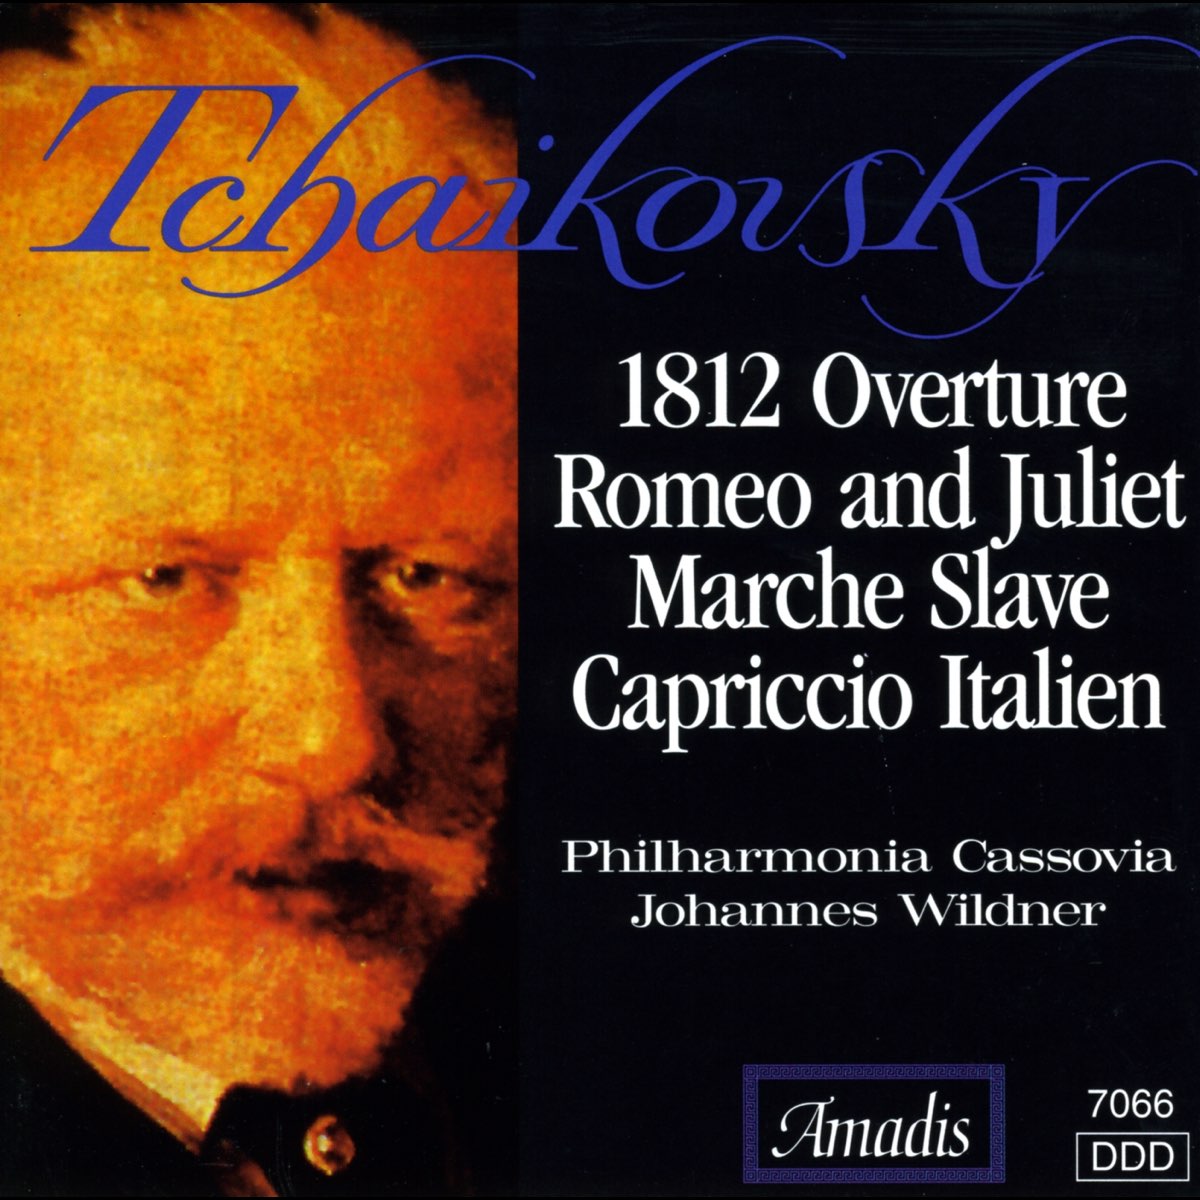 ‎Tchaikovsky: 1812 Overture - Romeo and Juliet - Capriccio Italien ...